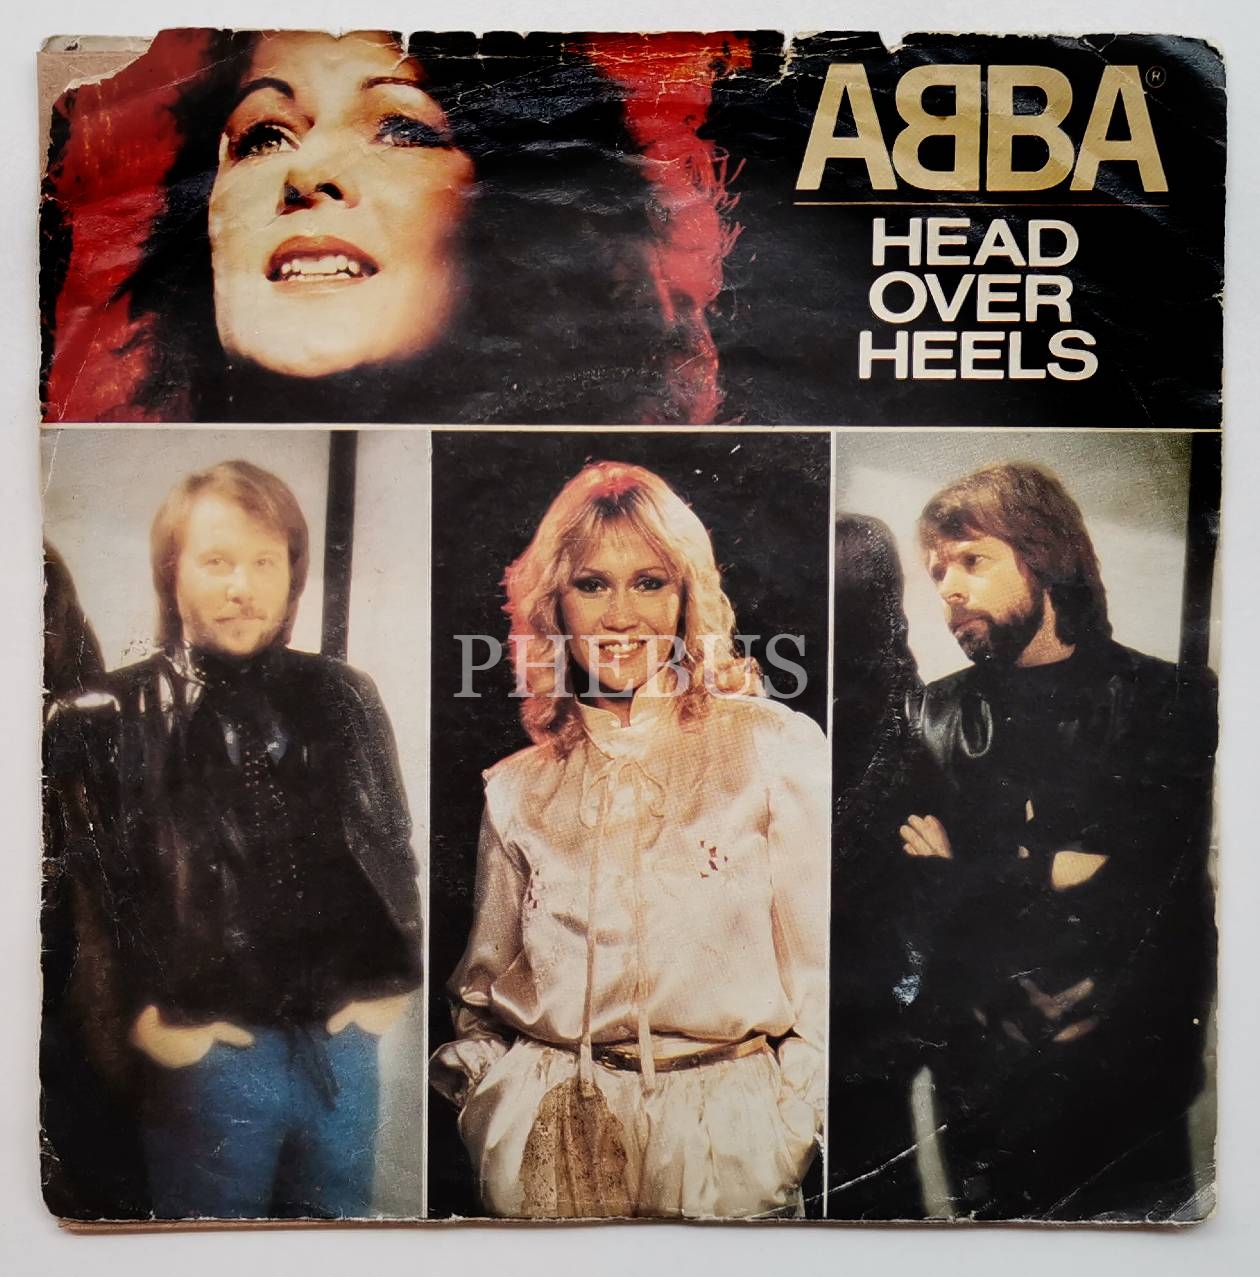 ABBA - Head Over Heels / The Visitors